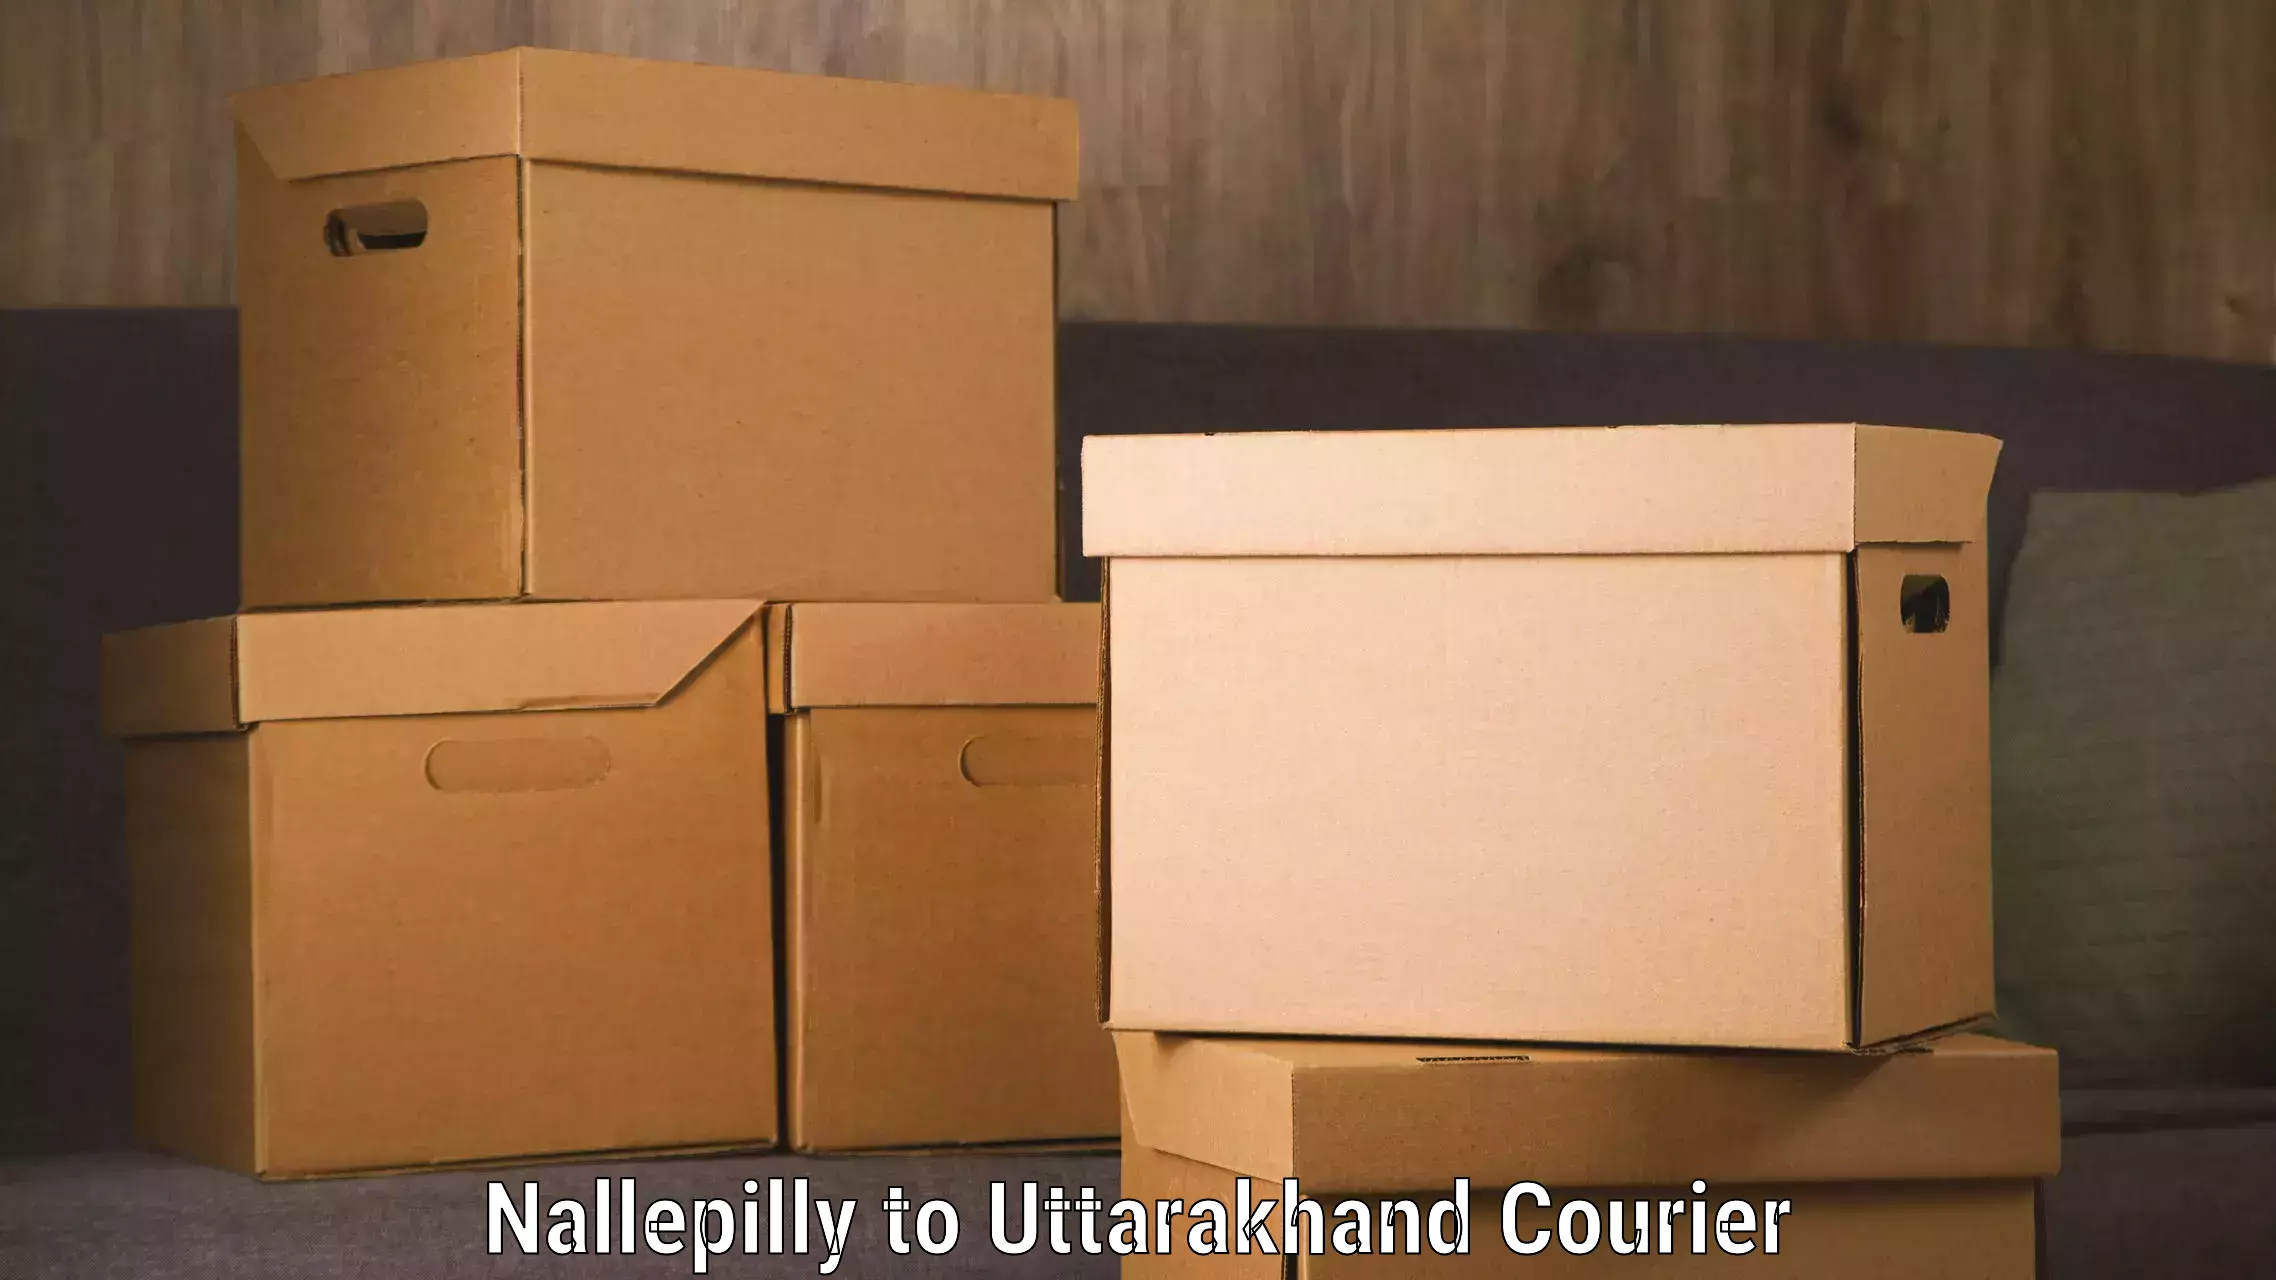 Package tracking in Nallepilly to Uttarakhand